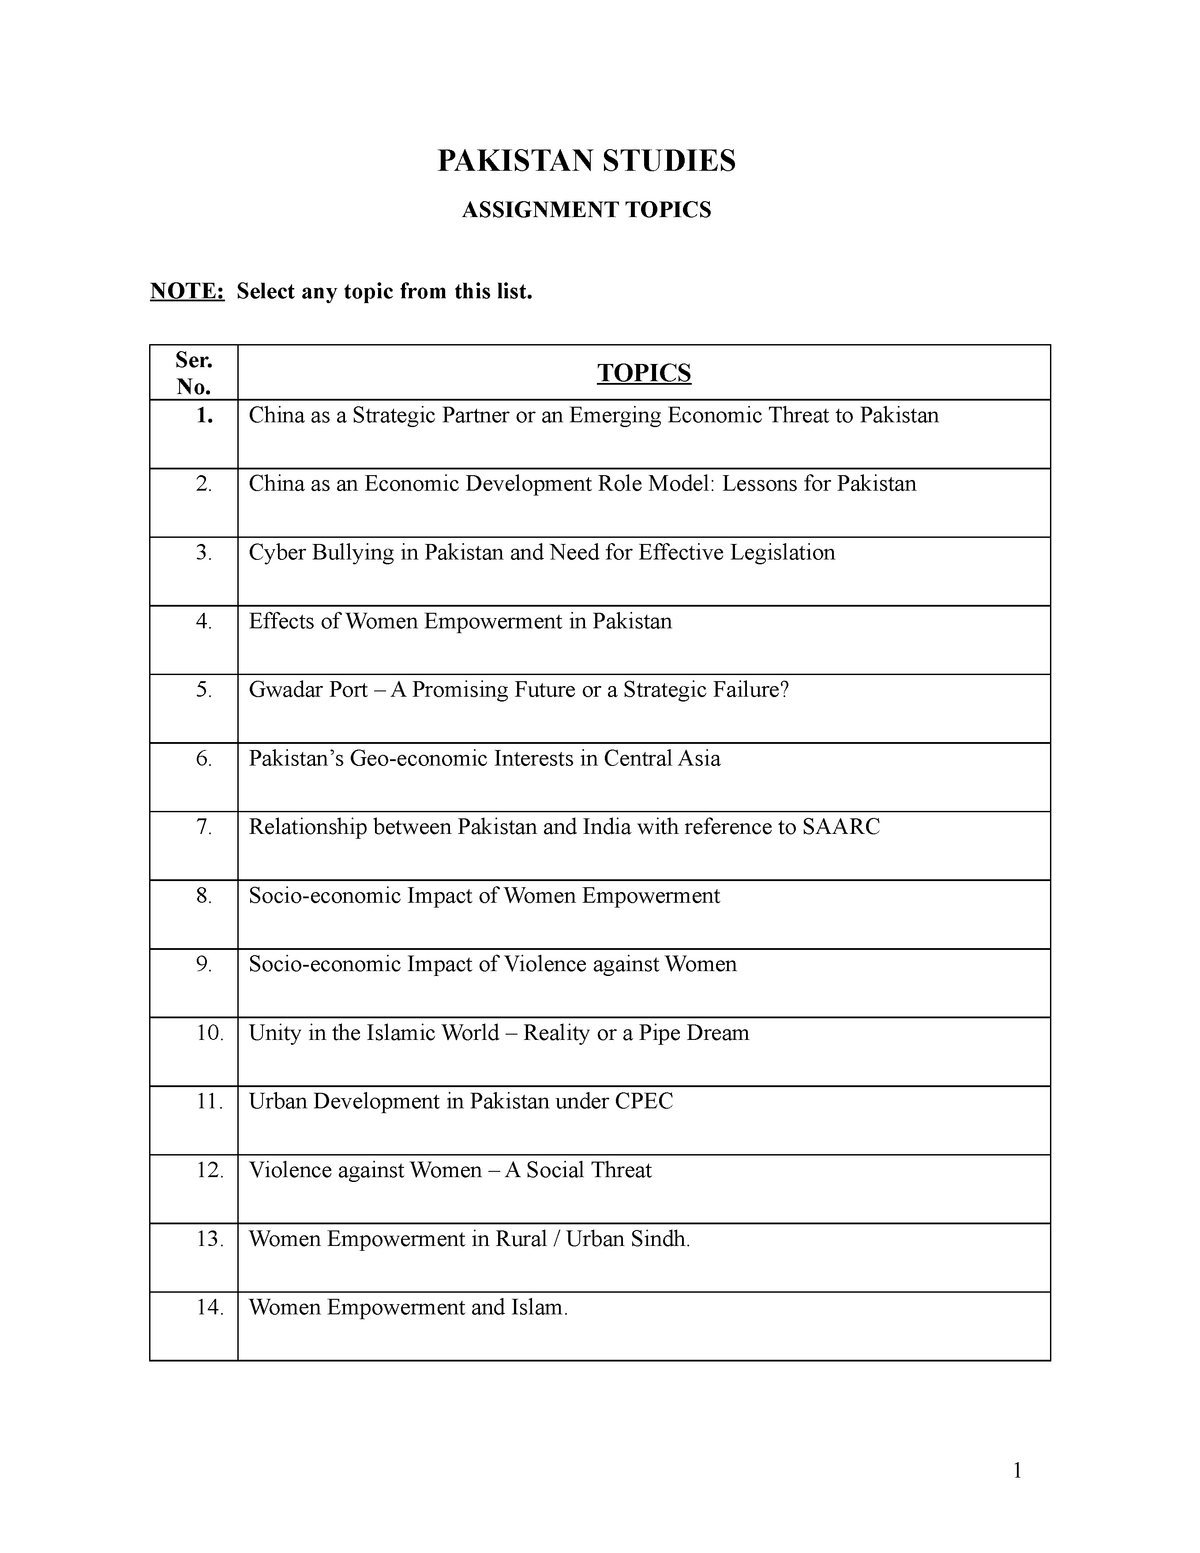 topics for assignment in pakistan studies